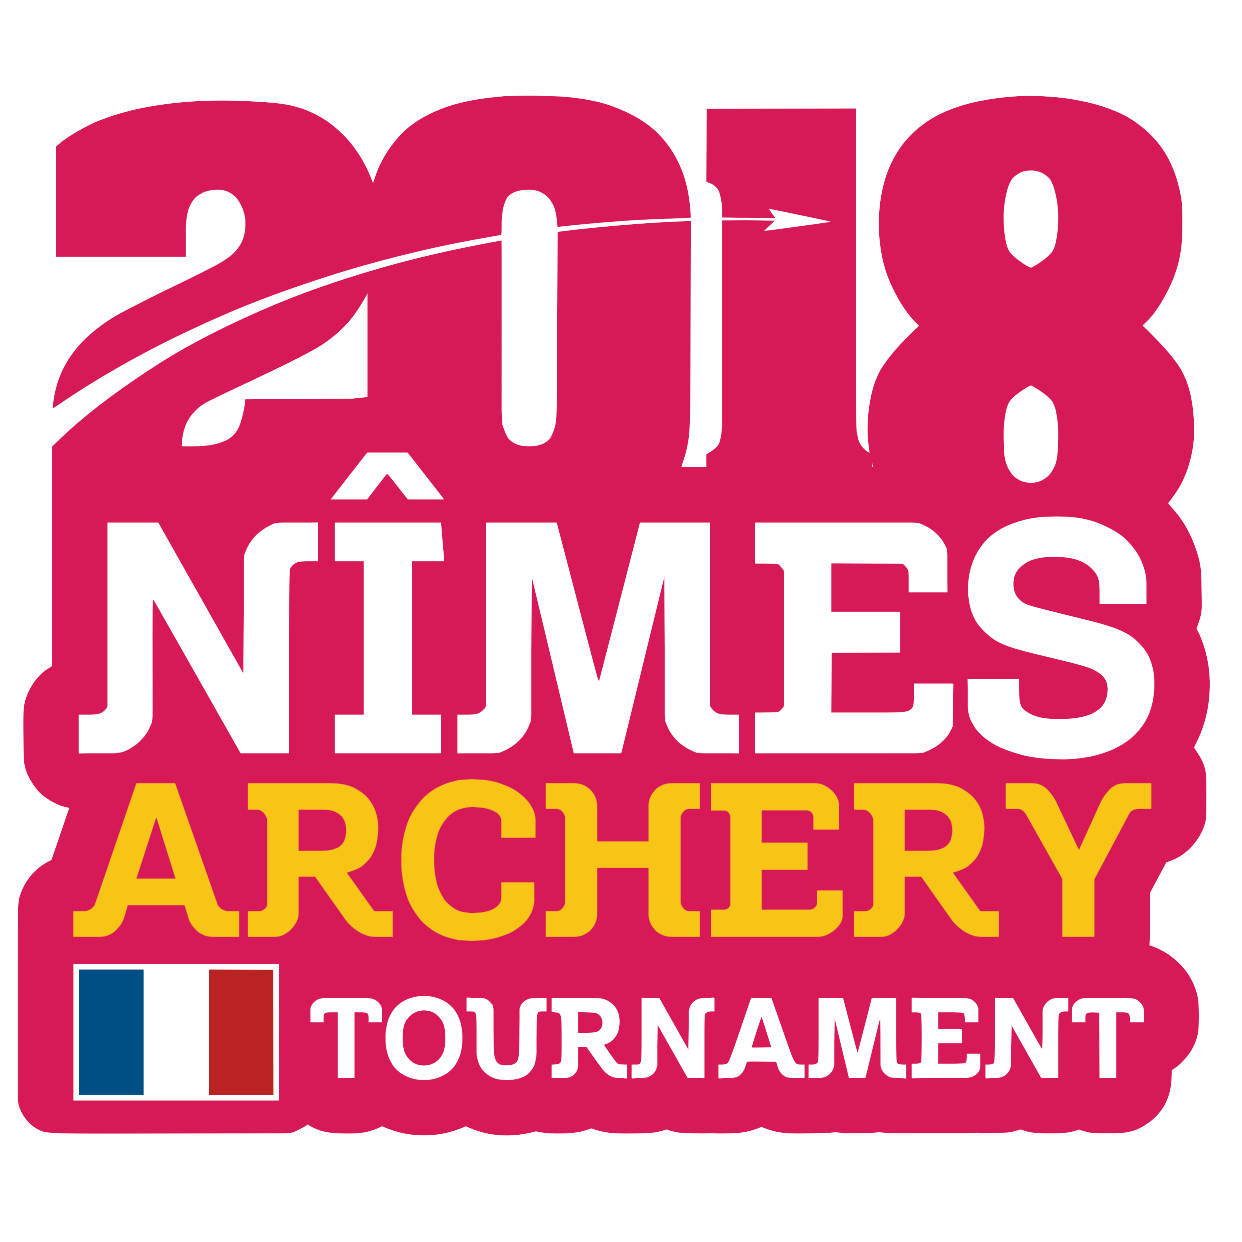 2018 Archery Indoor World Series